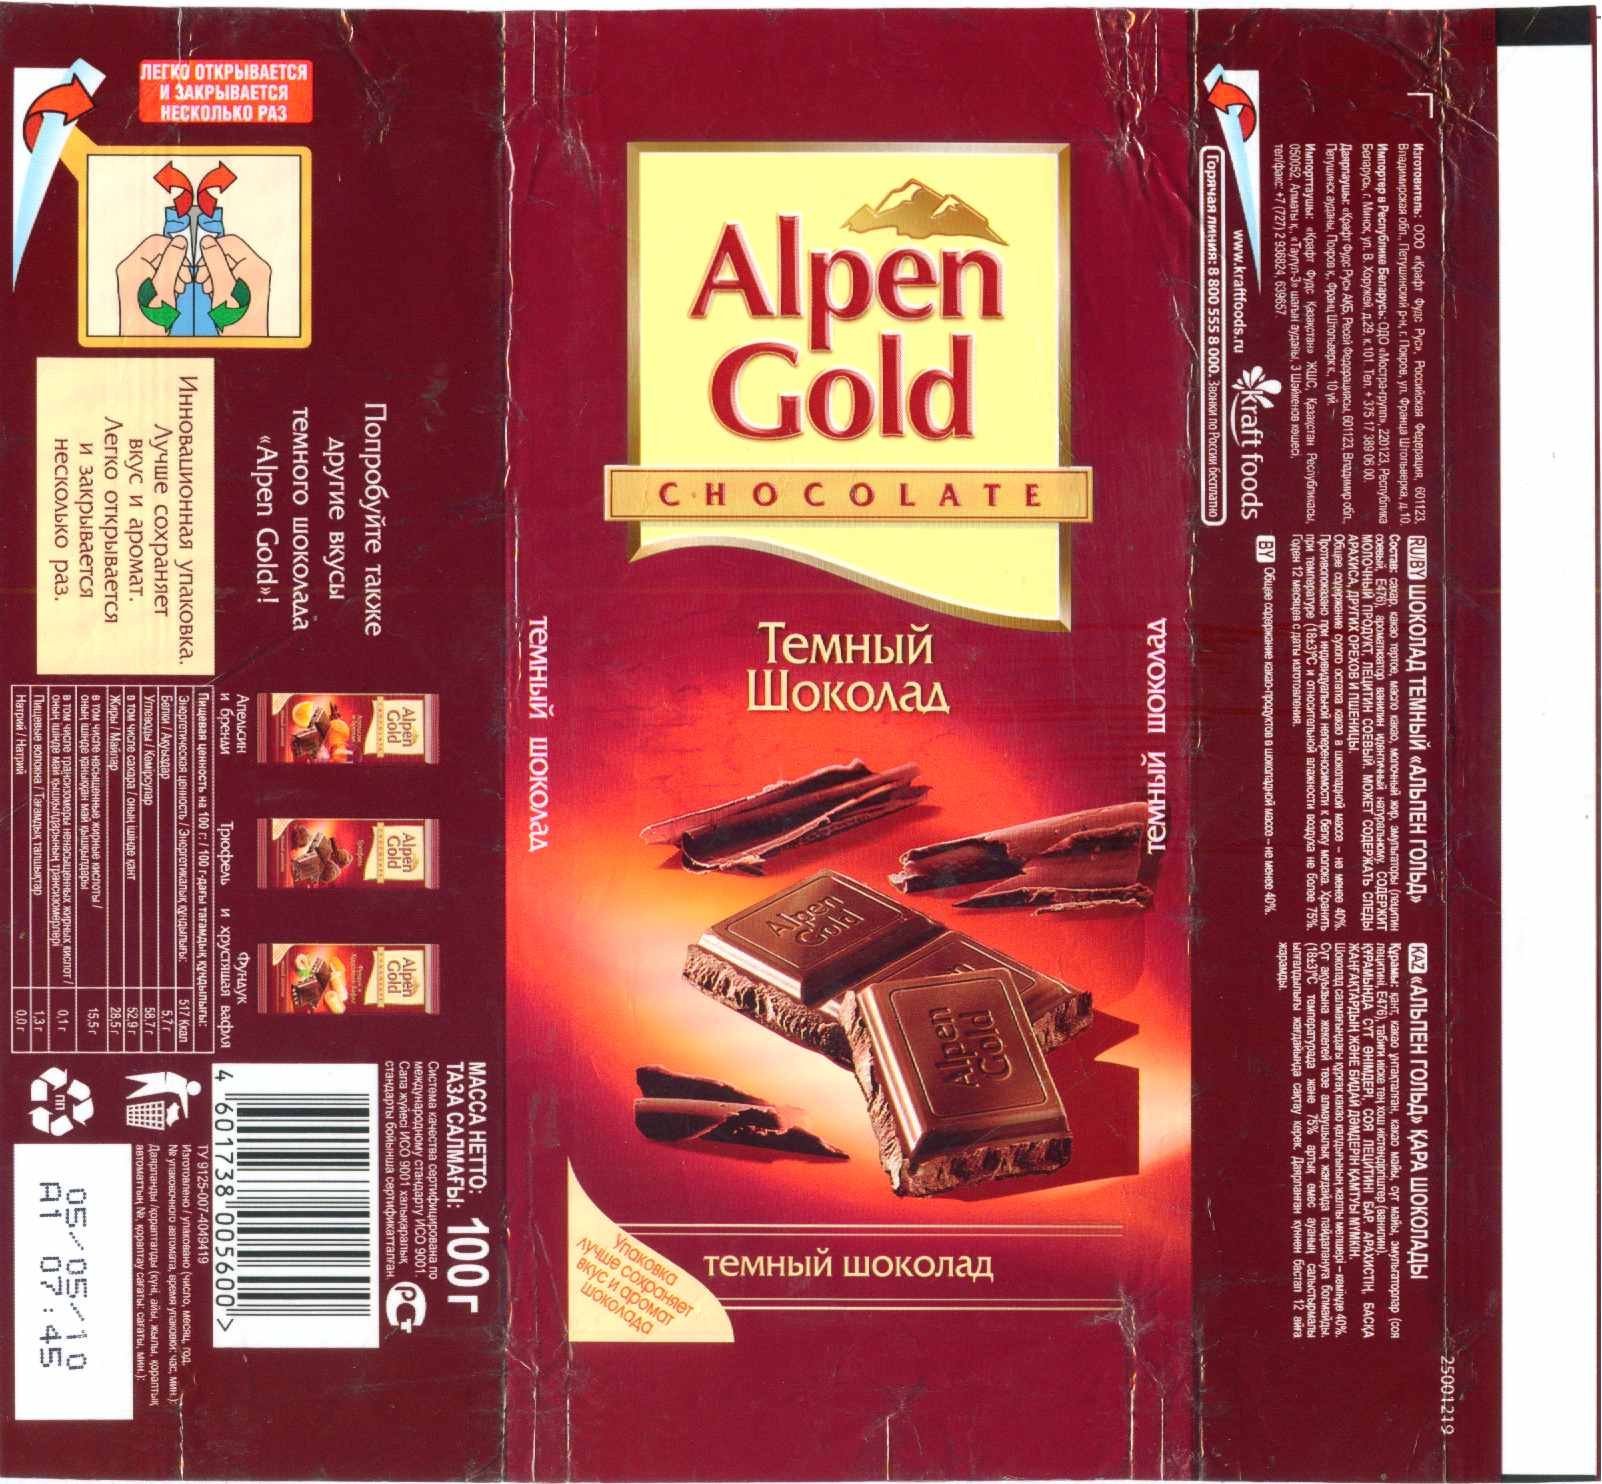 Какой размер у шоколадки. Вкусы шоколада Альпен Гольд. Состав шоколада Альпен Гольд. Шоколад Альпен Гольд темный шоколад. Альпен Гольд темный шоколад состав.